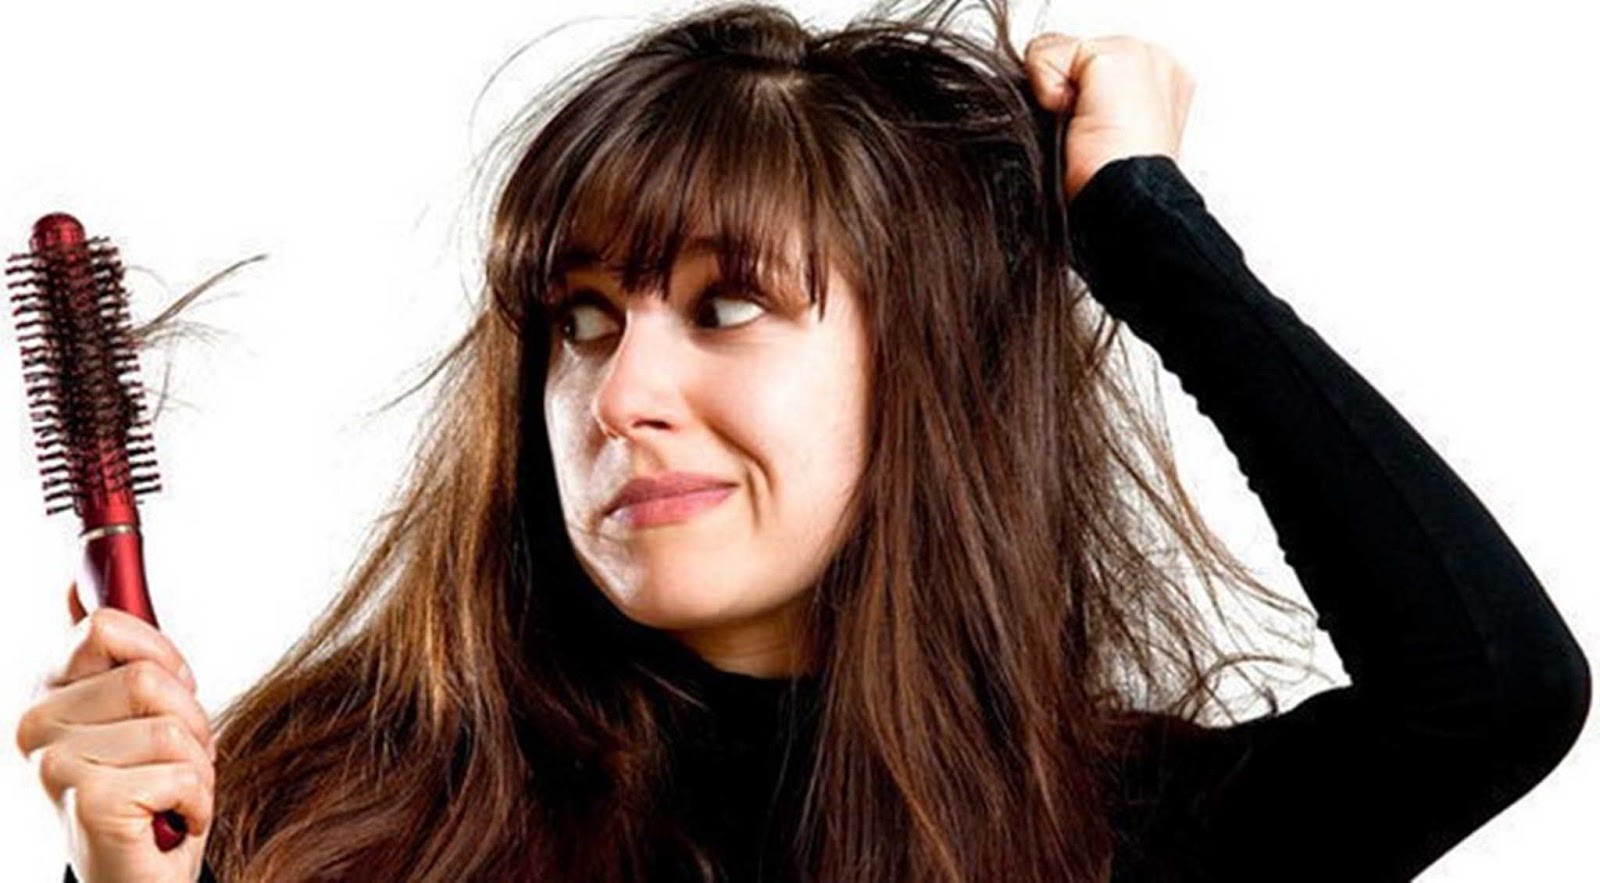 Penyebab Rambut Rontok Artikel Lengkap Tips Cara Merawat Rambut